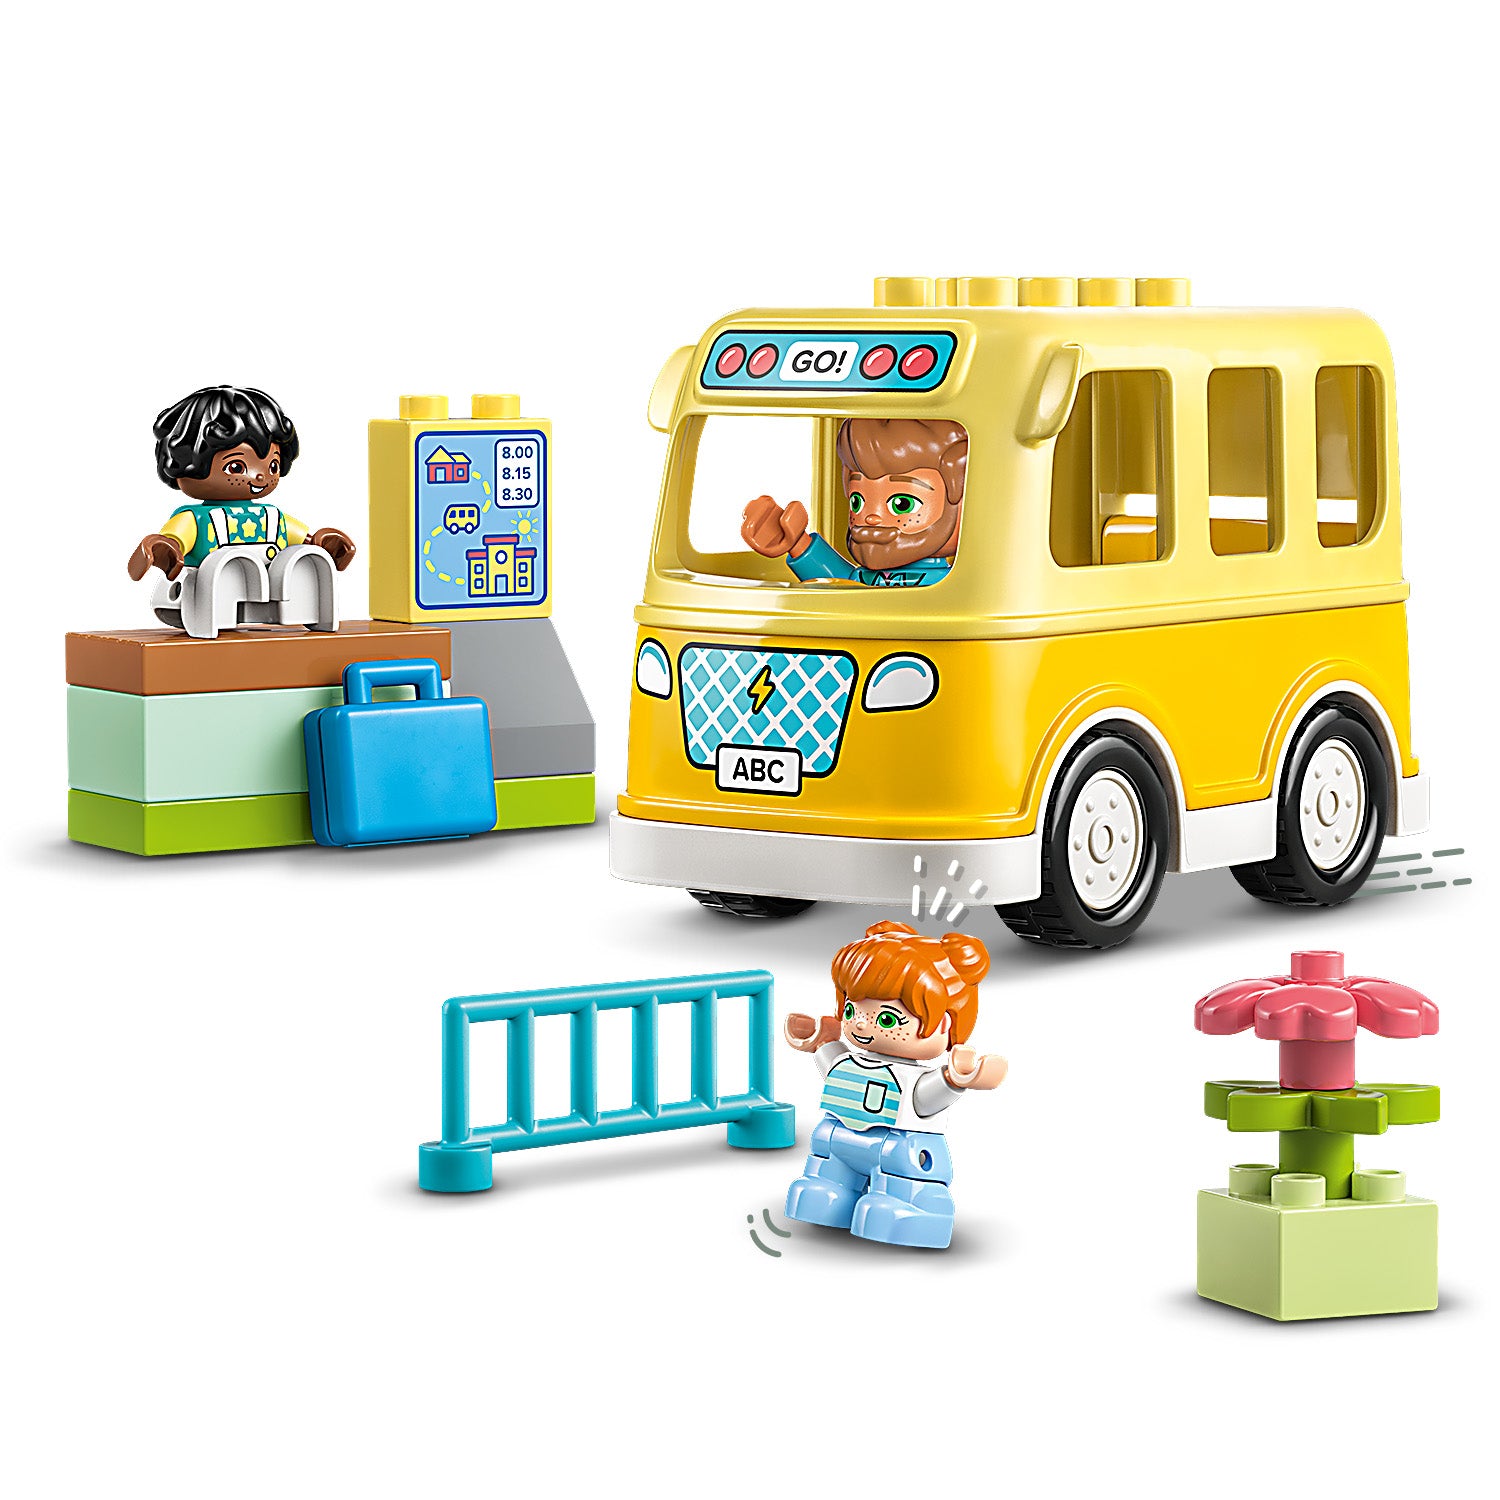 Lego 10988 The Bus Ride